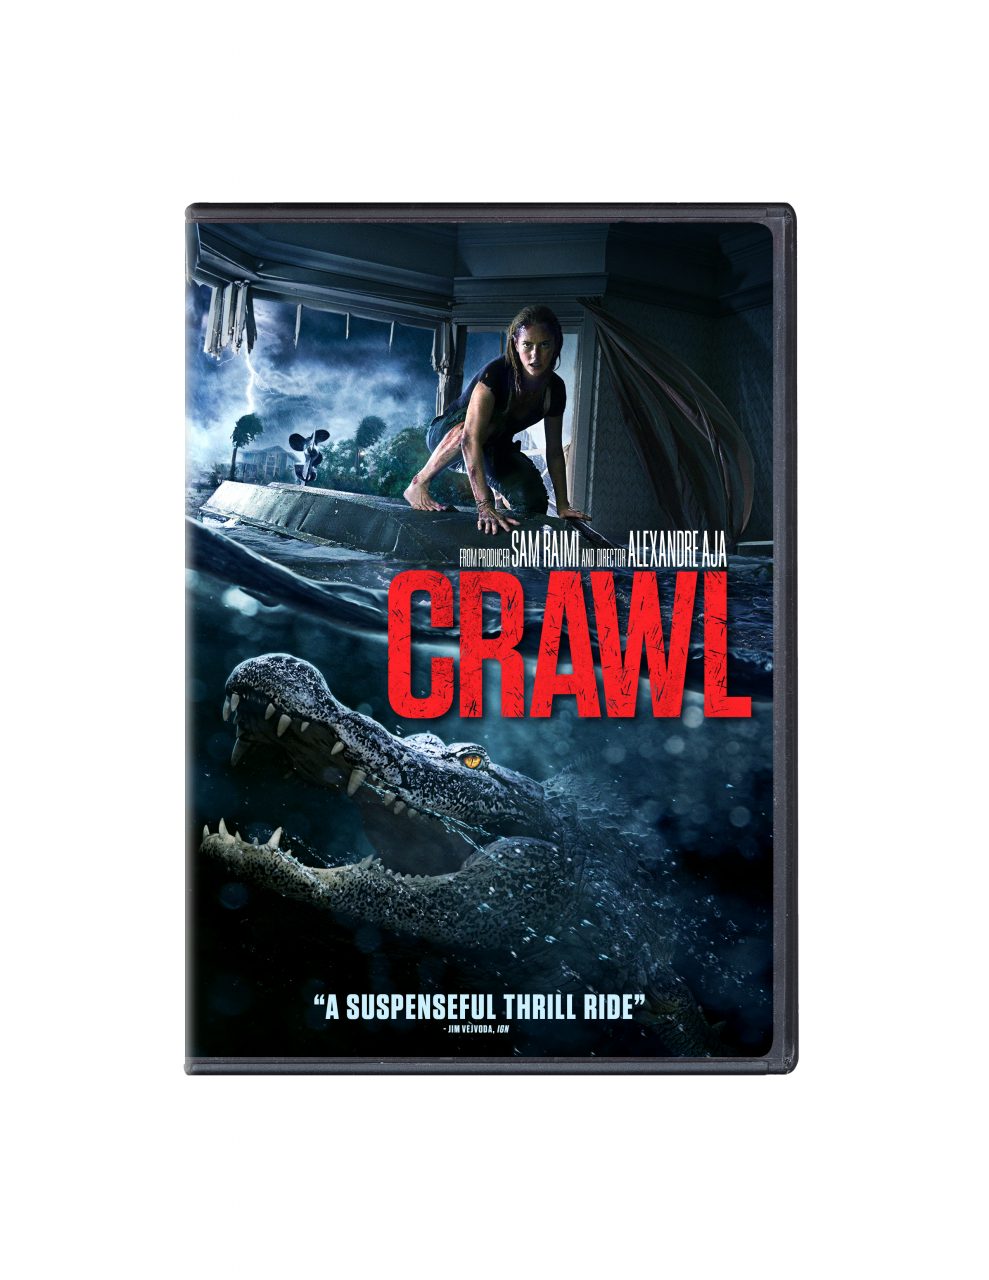 Crawl DVD cover (Paramount Home Entertainment)